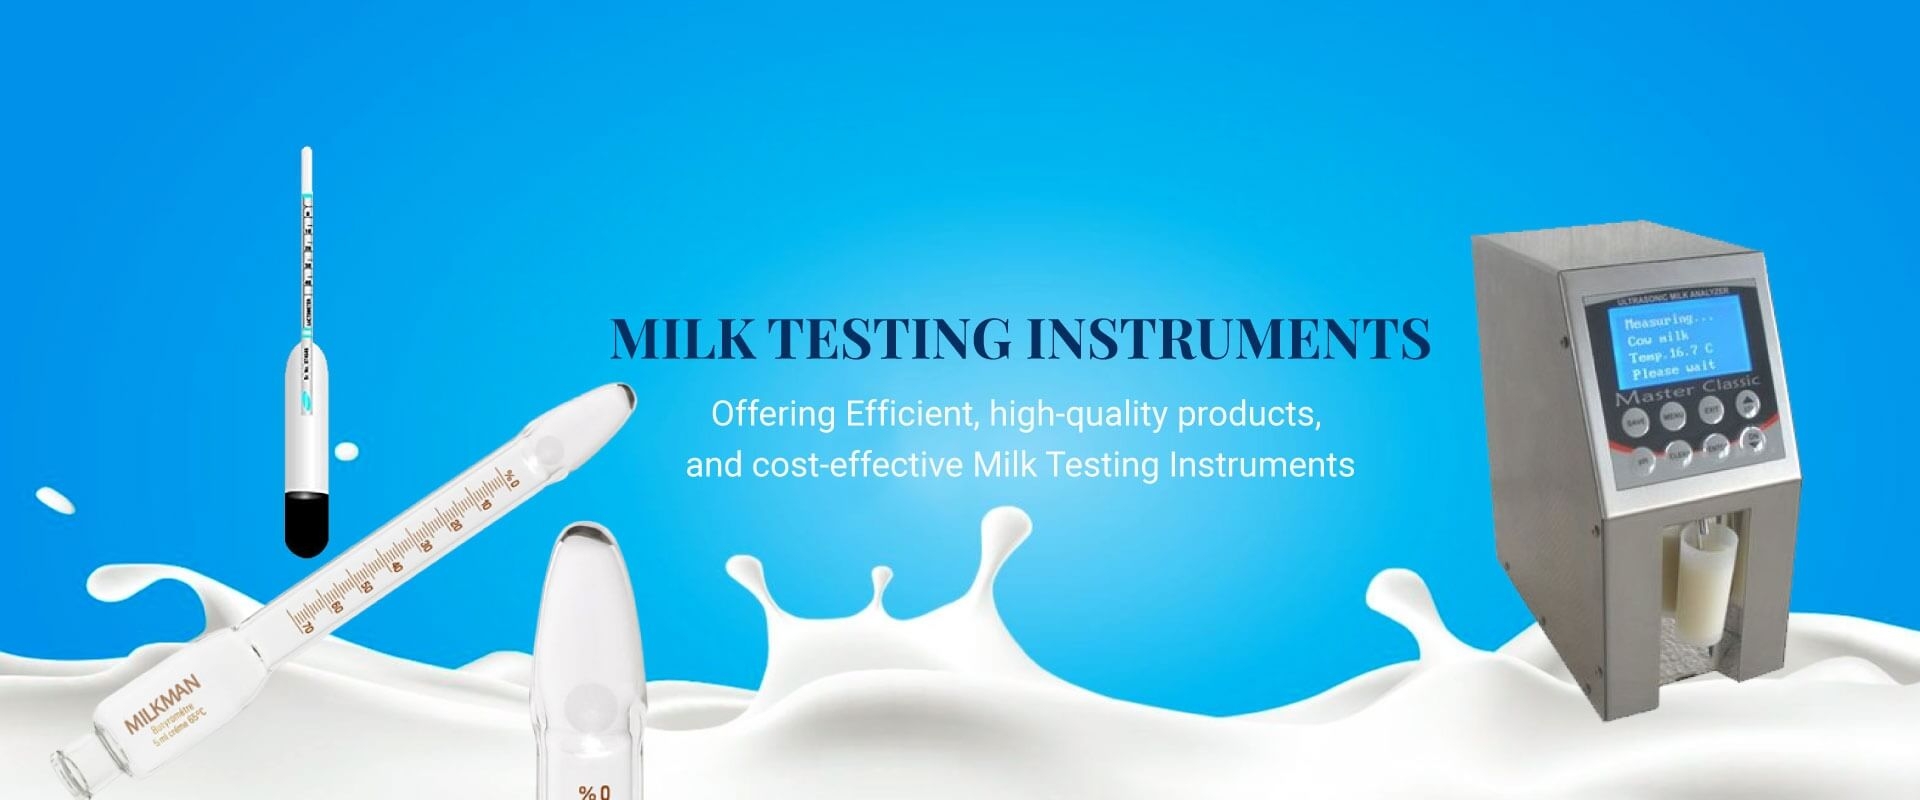 Milk Testing Instruments in Russia